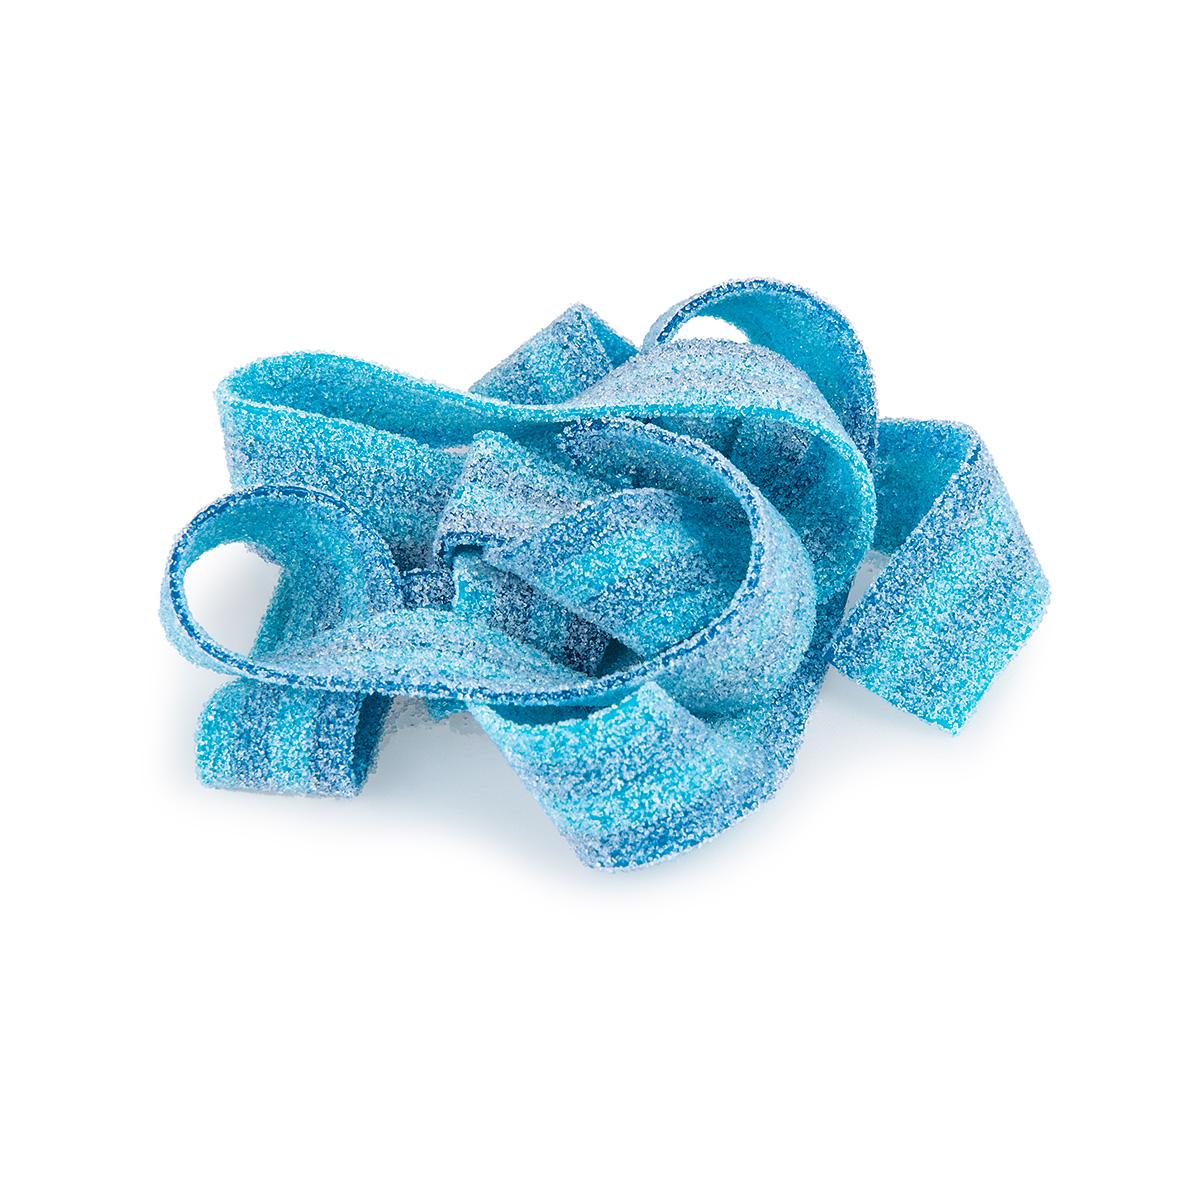  Blue Raspberry Sour Power Belts Candy - 1 Lb.